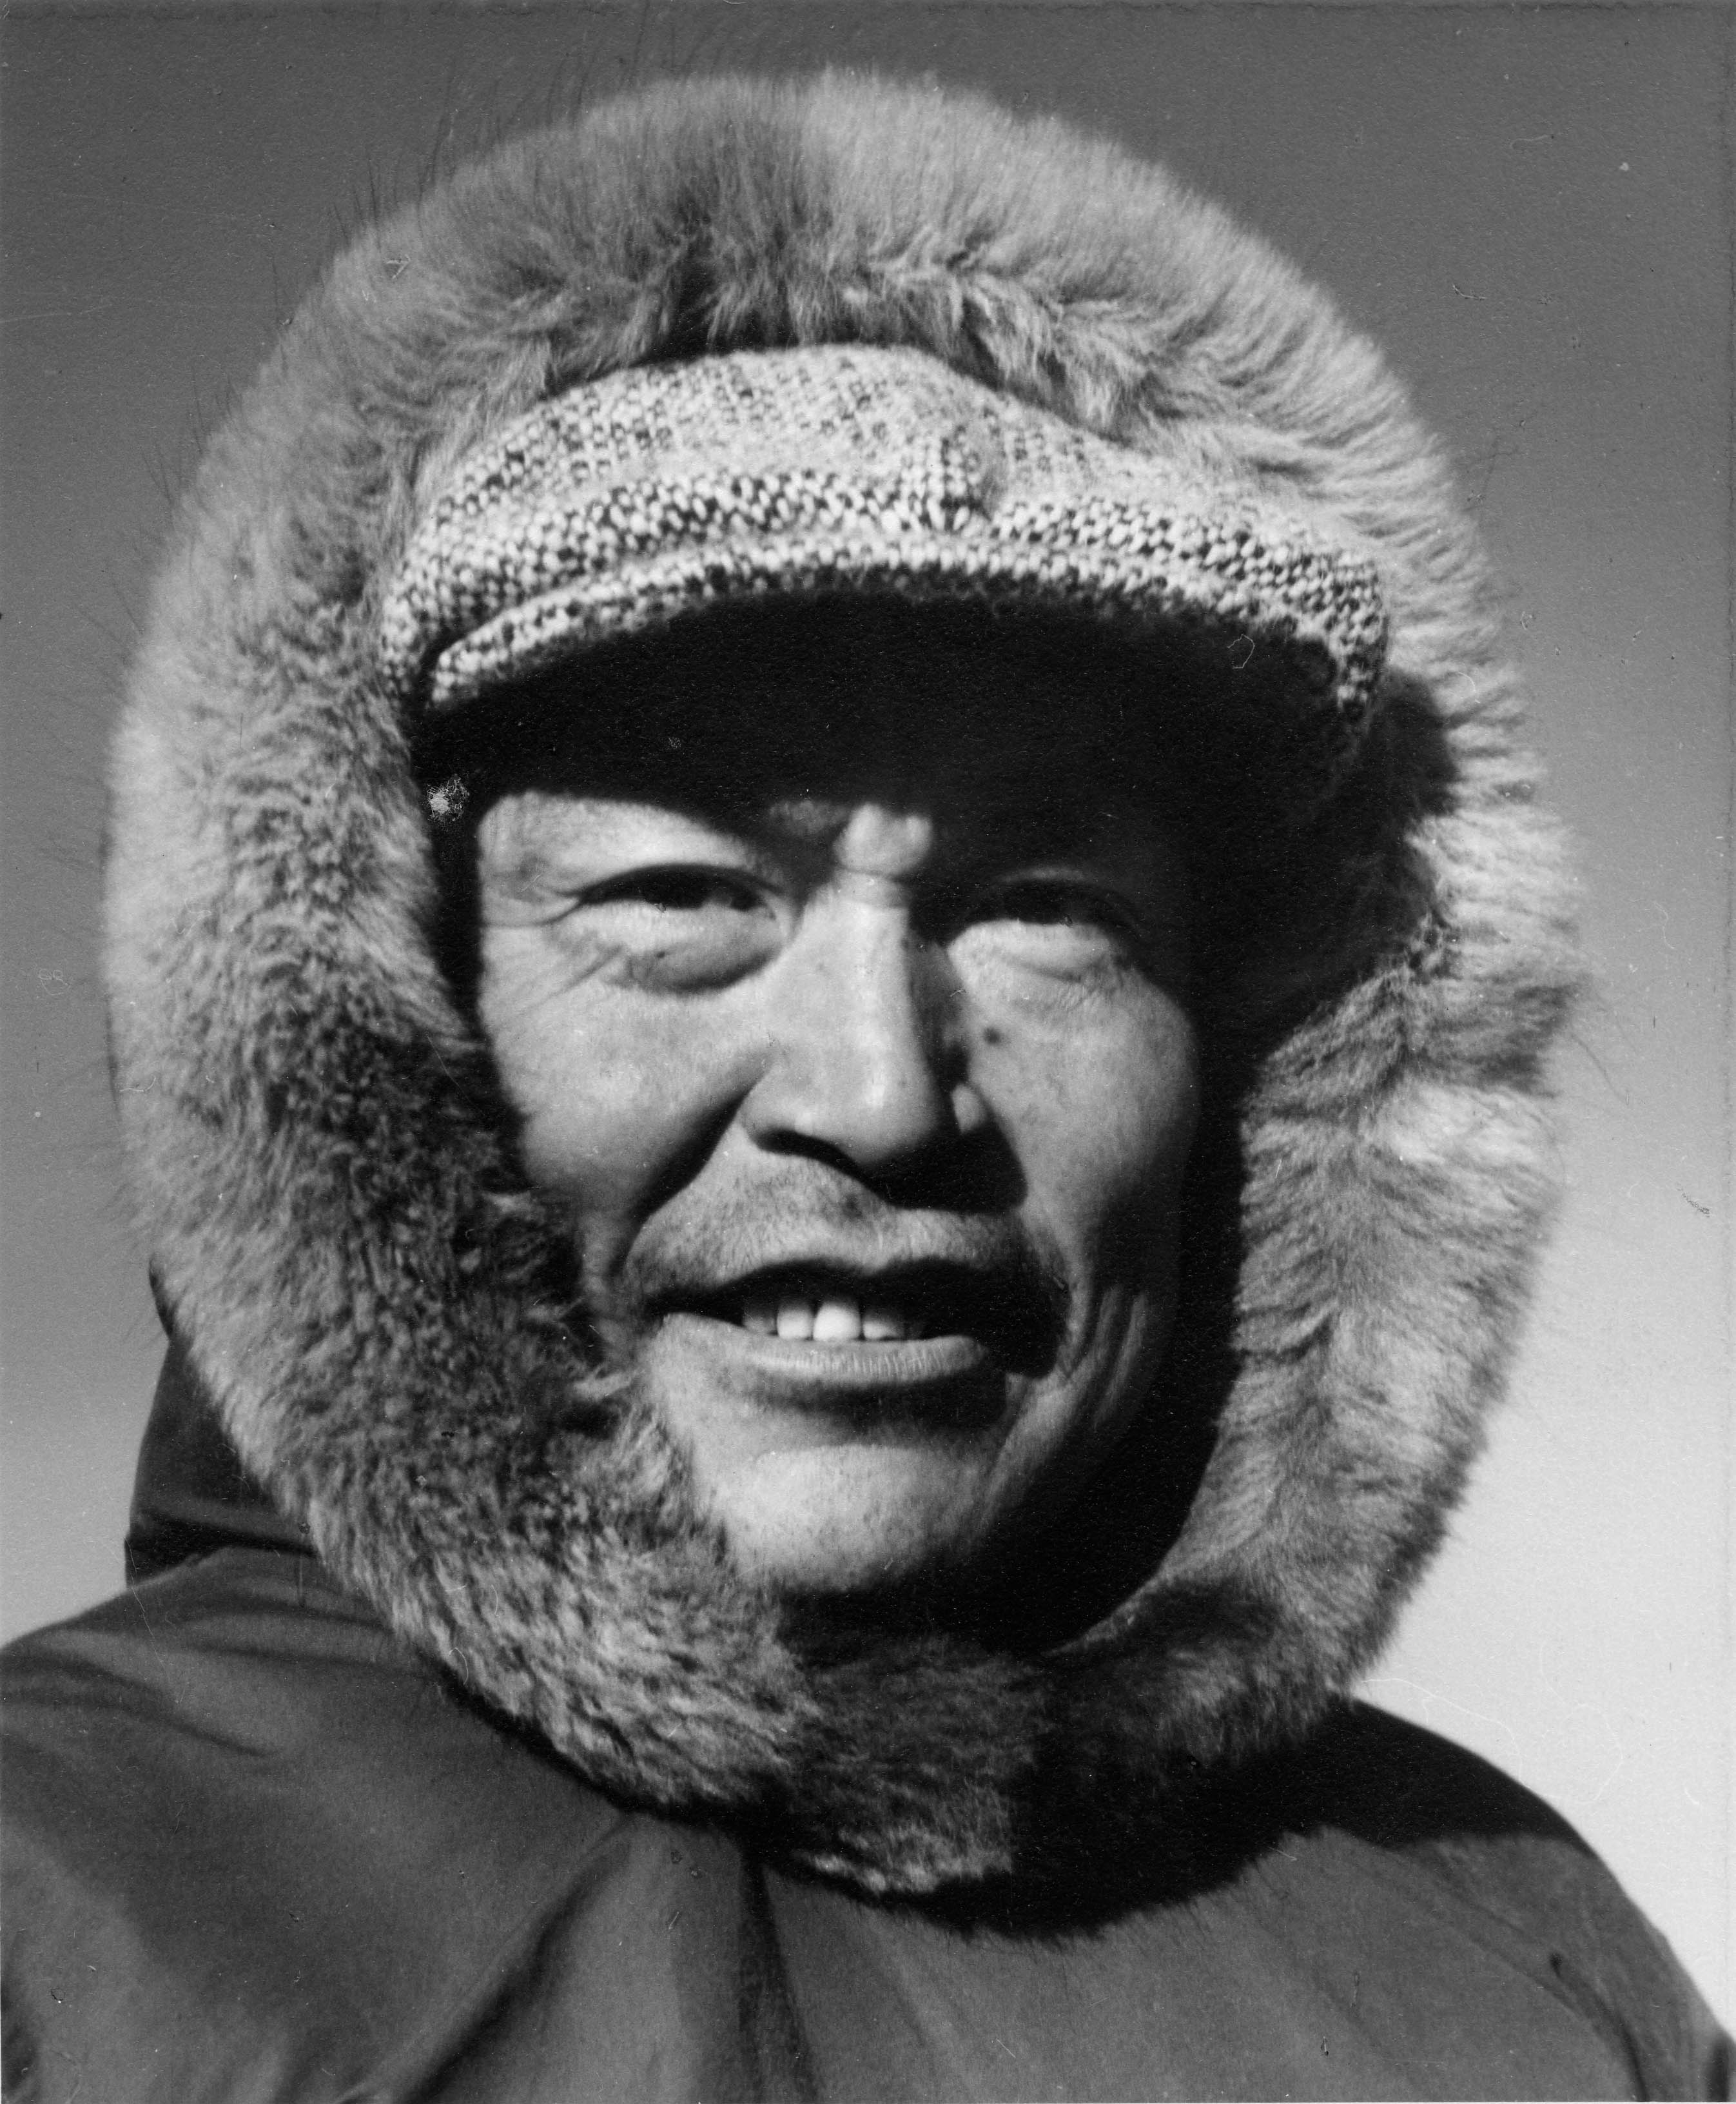 Oshowetuk, Baffin Island, 1960